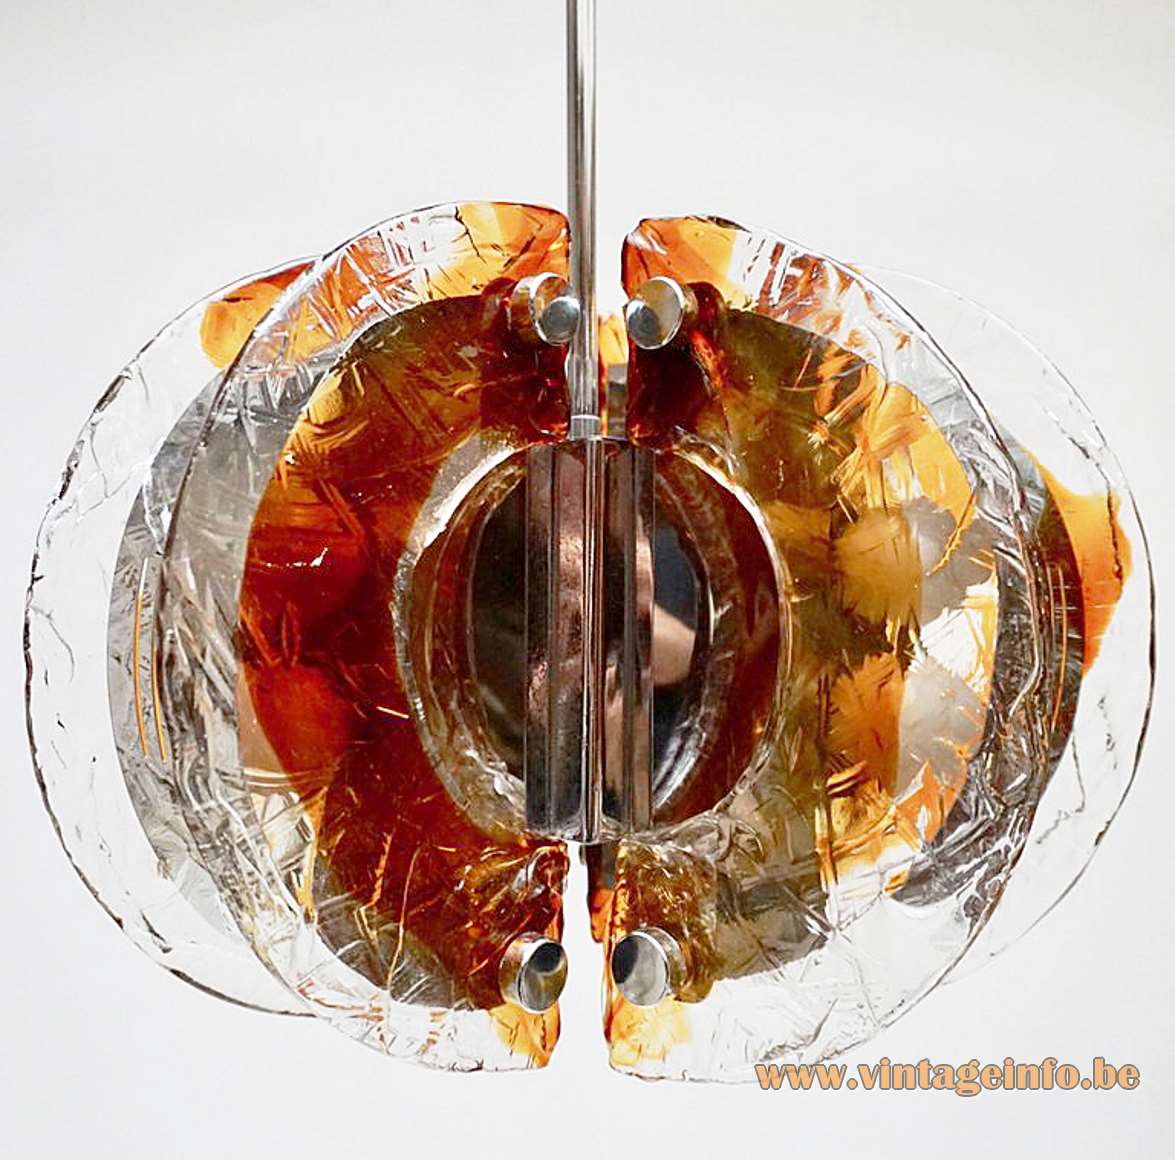 Angelo Brotto amber glass pendant lamp half circles moon citrus parts chrome slats Esperia Italy 1970s